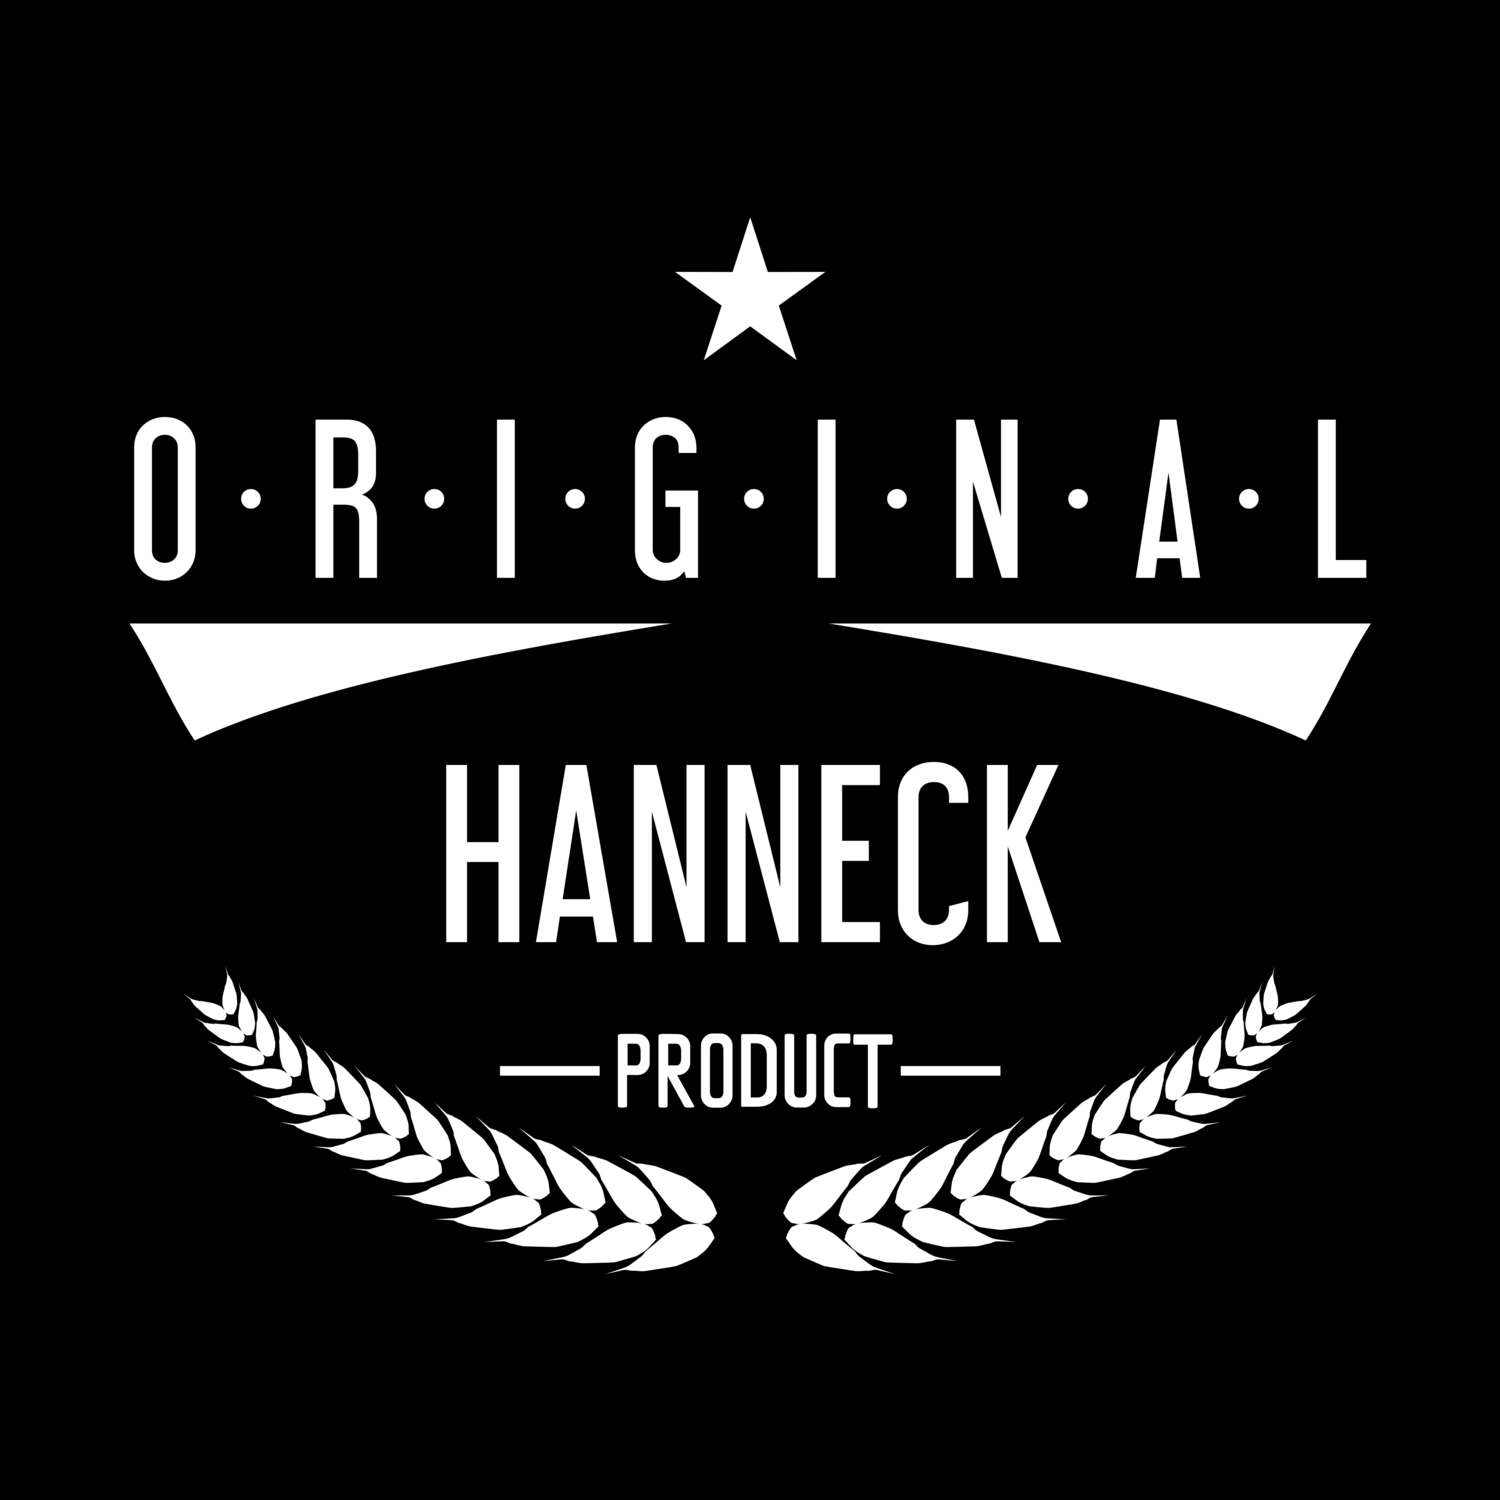 Hanneck T-Shirt »Original Product«